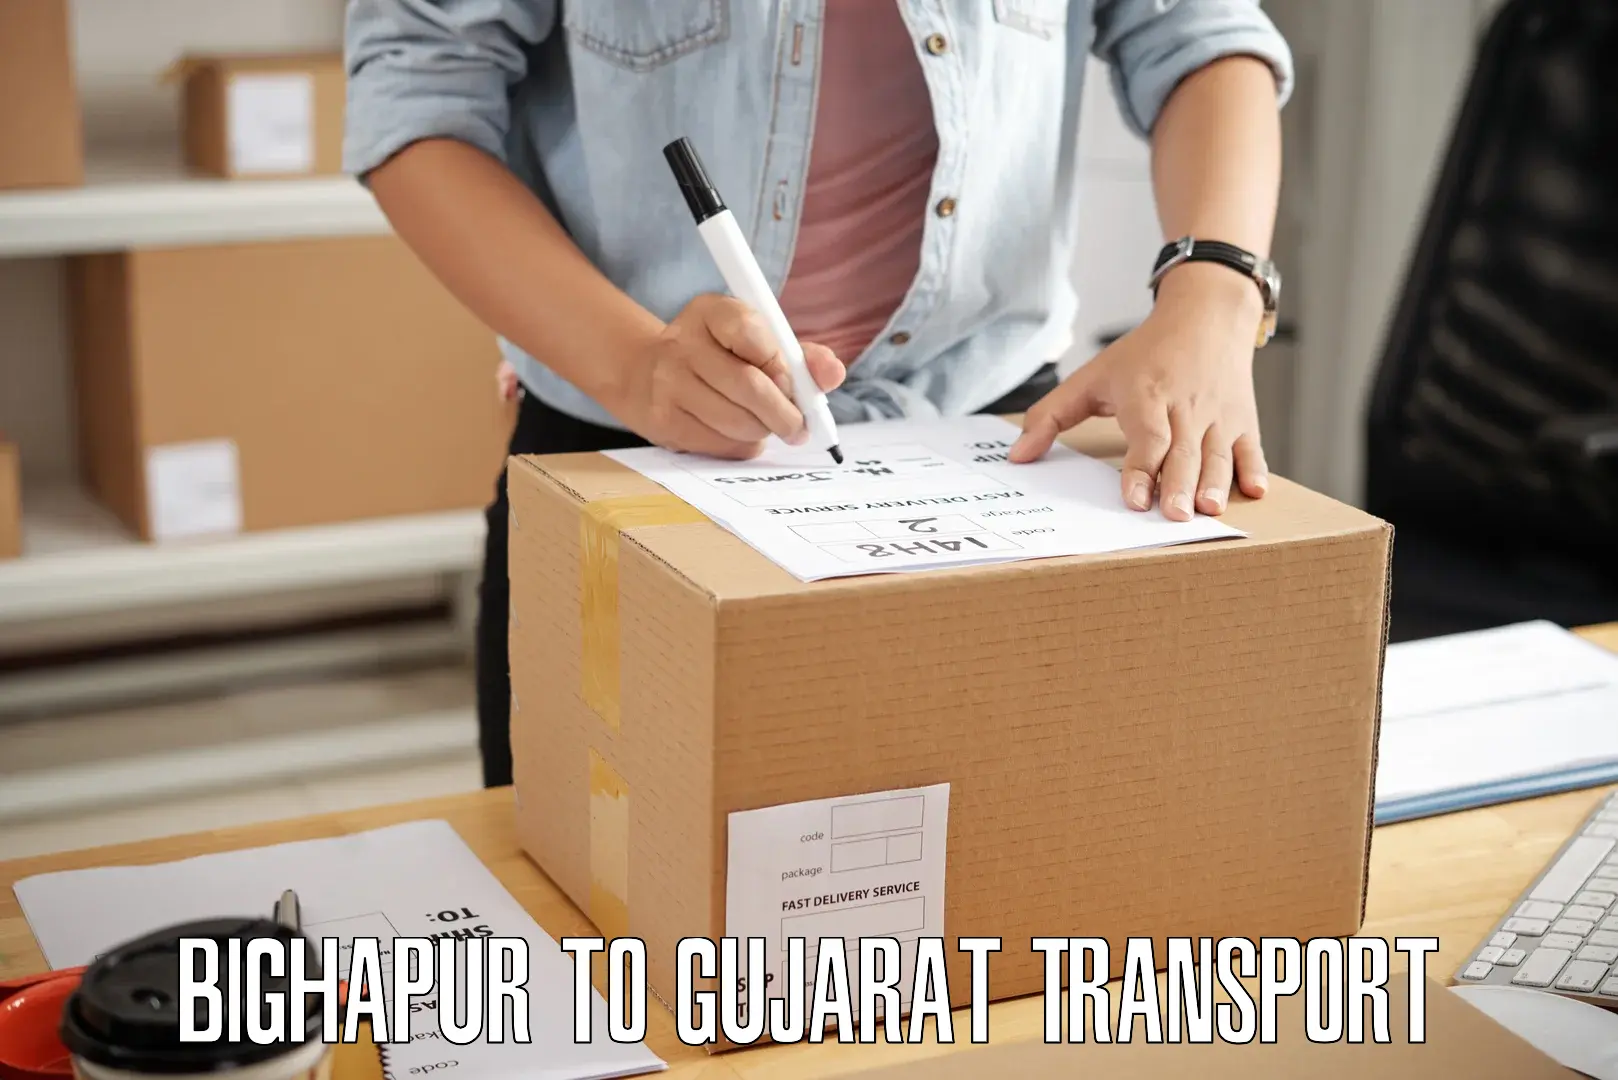 Vehicle parcel service Bighapur to Tarapur